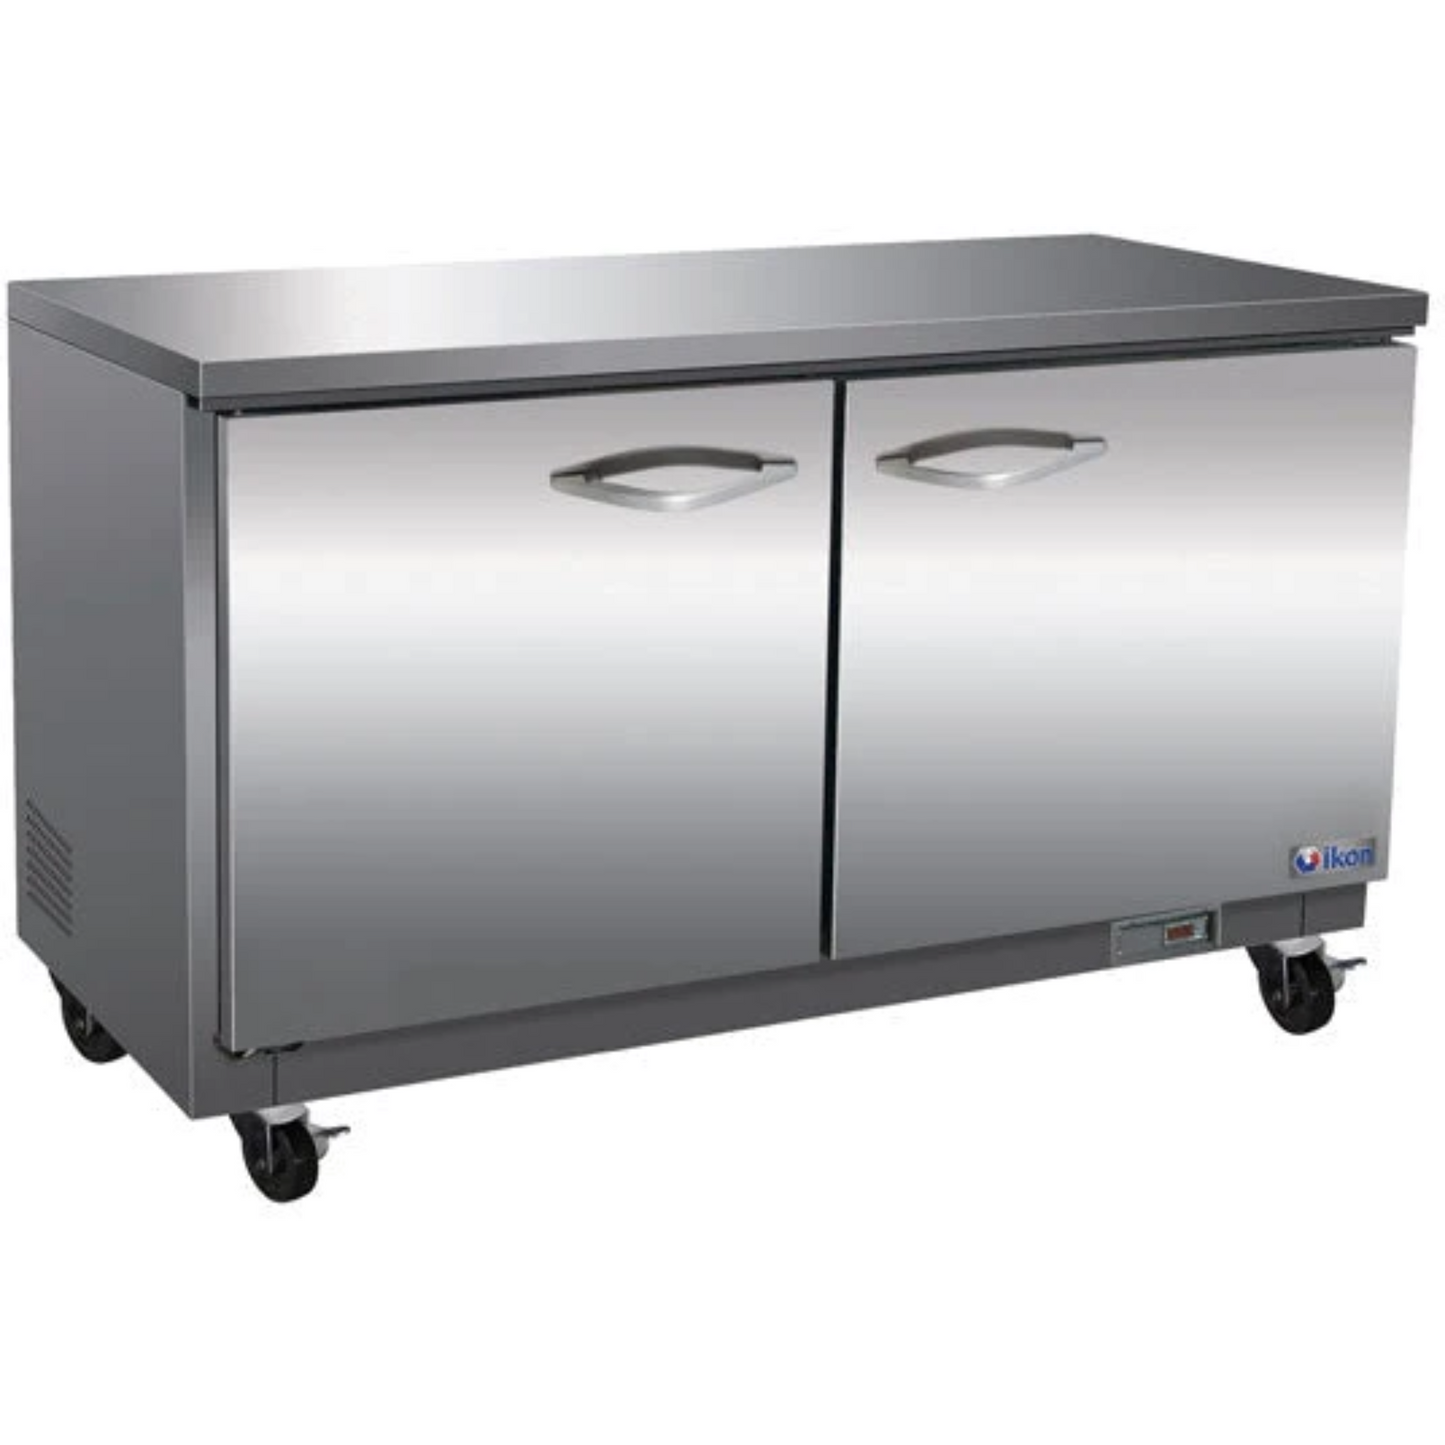 IKON IUC36R 36" Undercounter Refrigerator